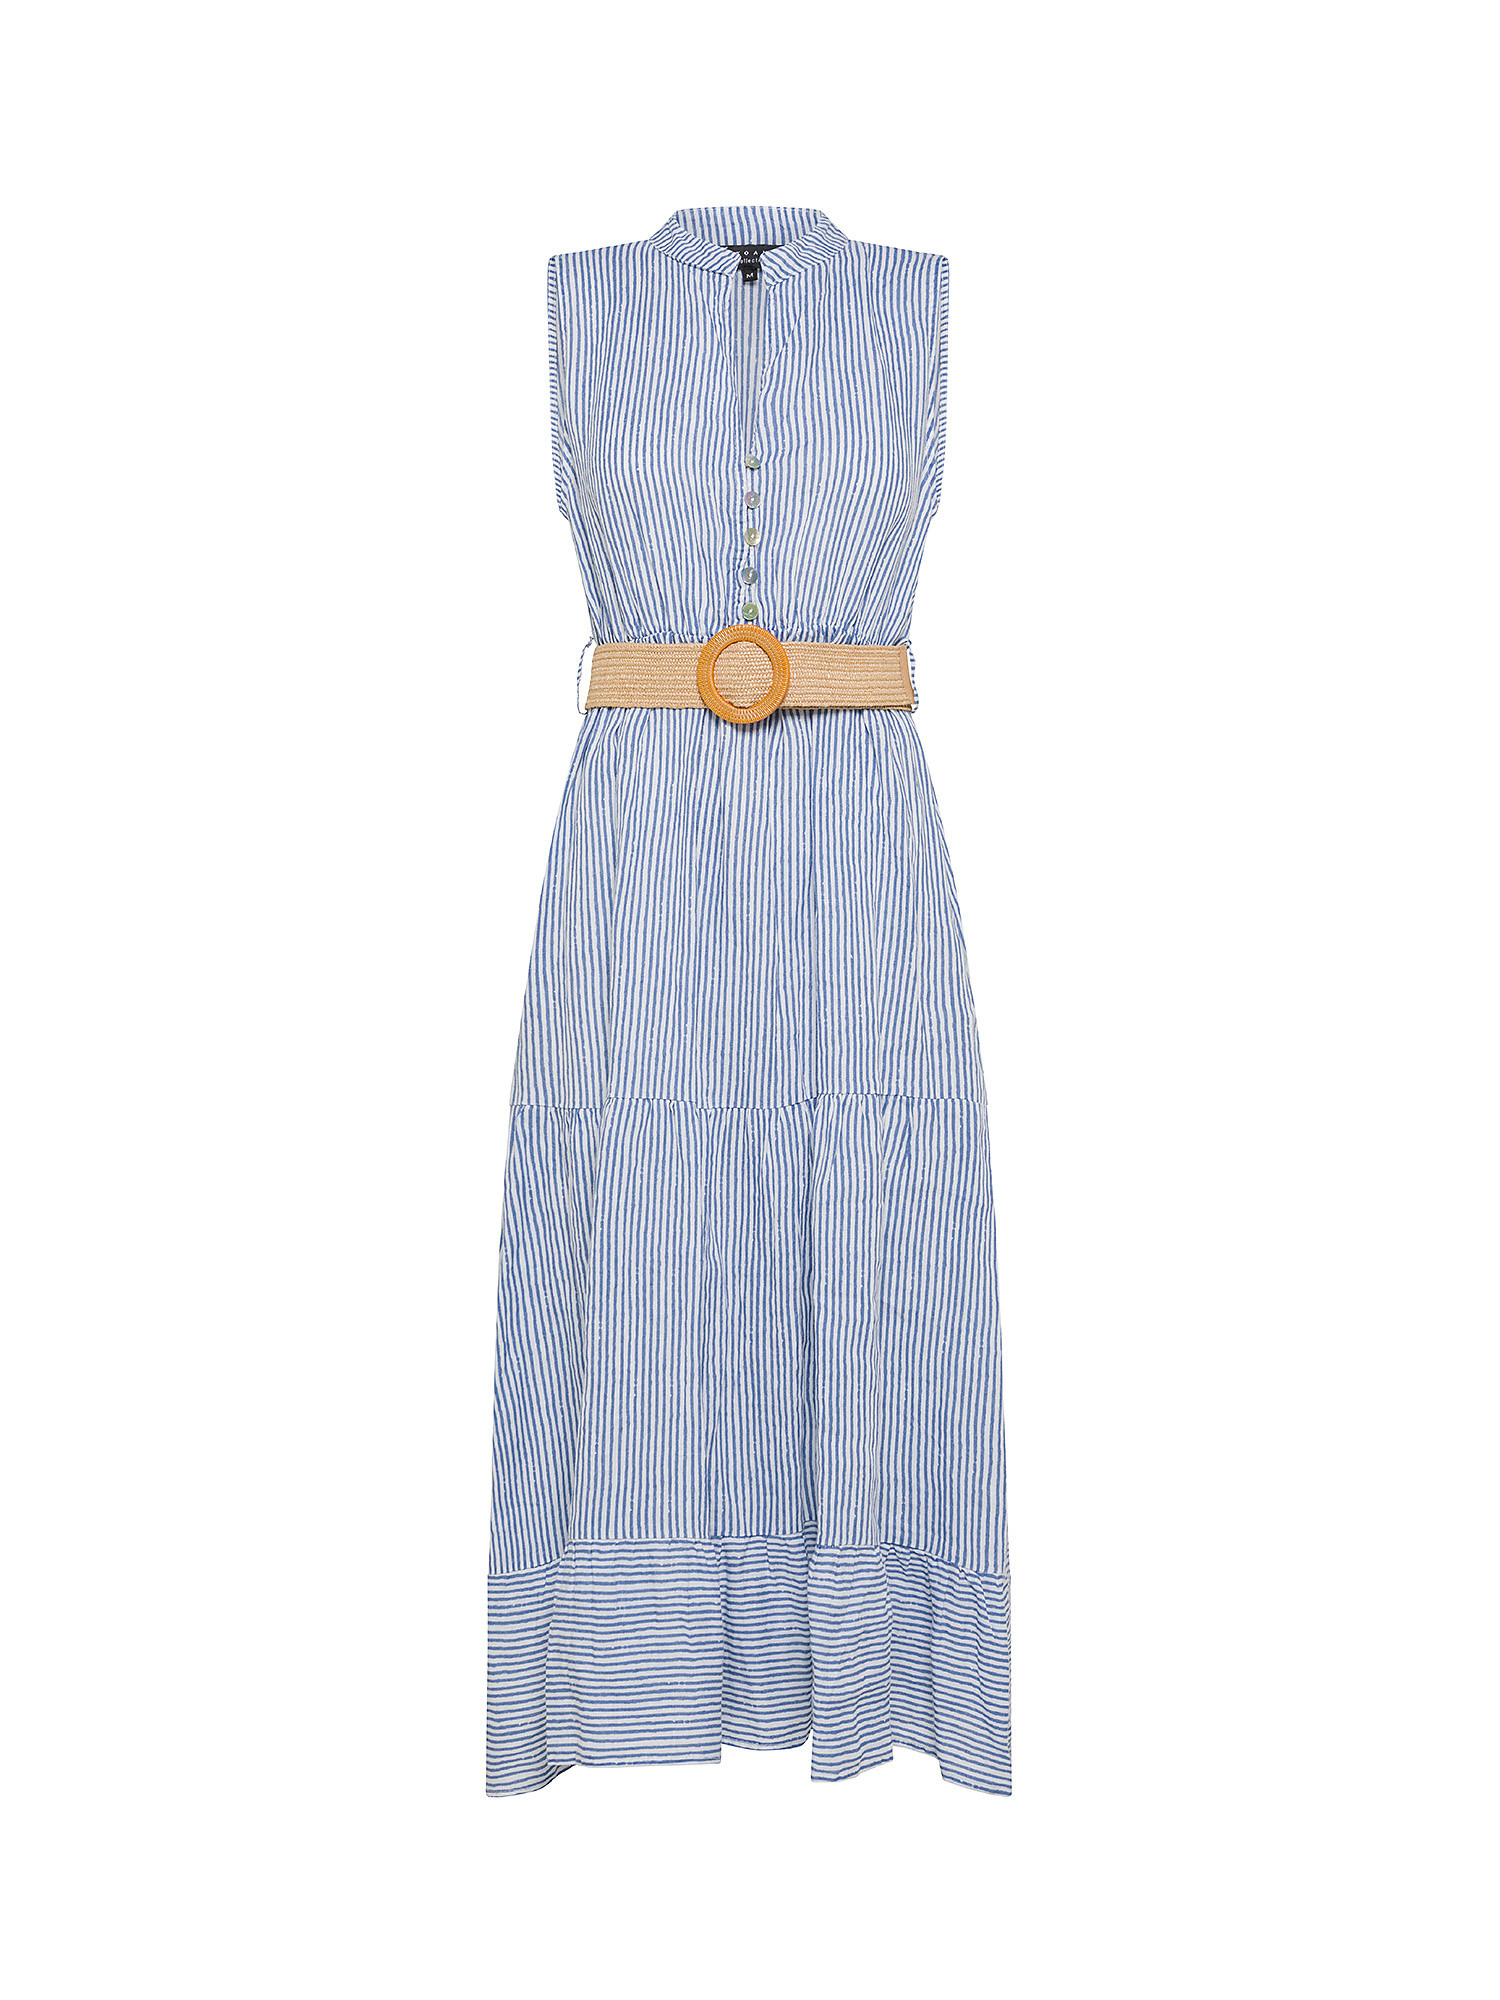 Koan - Long striped linen dress, Light Blue, large image number 0